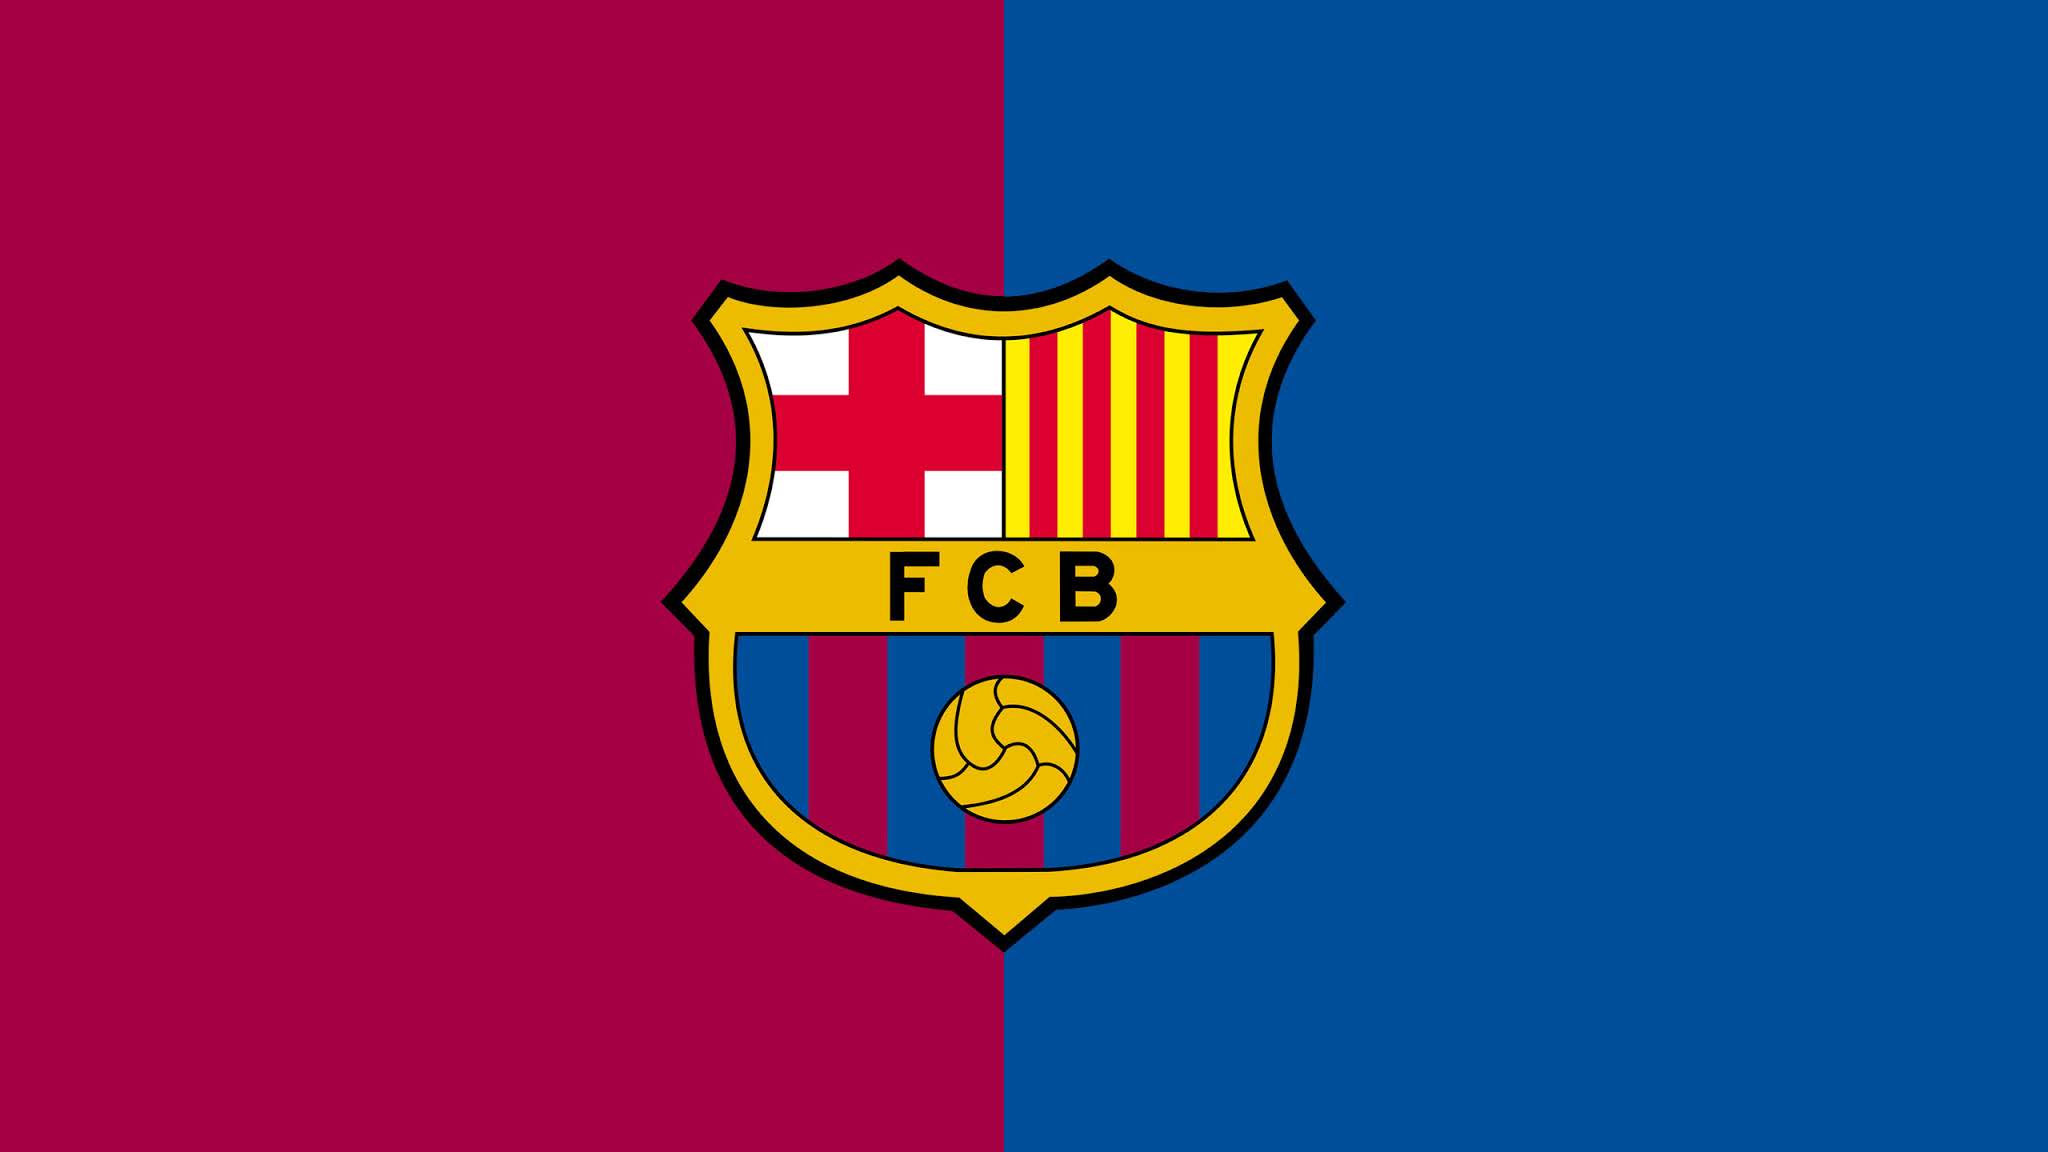 FC Barcelona 2020 Wallpaper Free FC Barcelona 2020